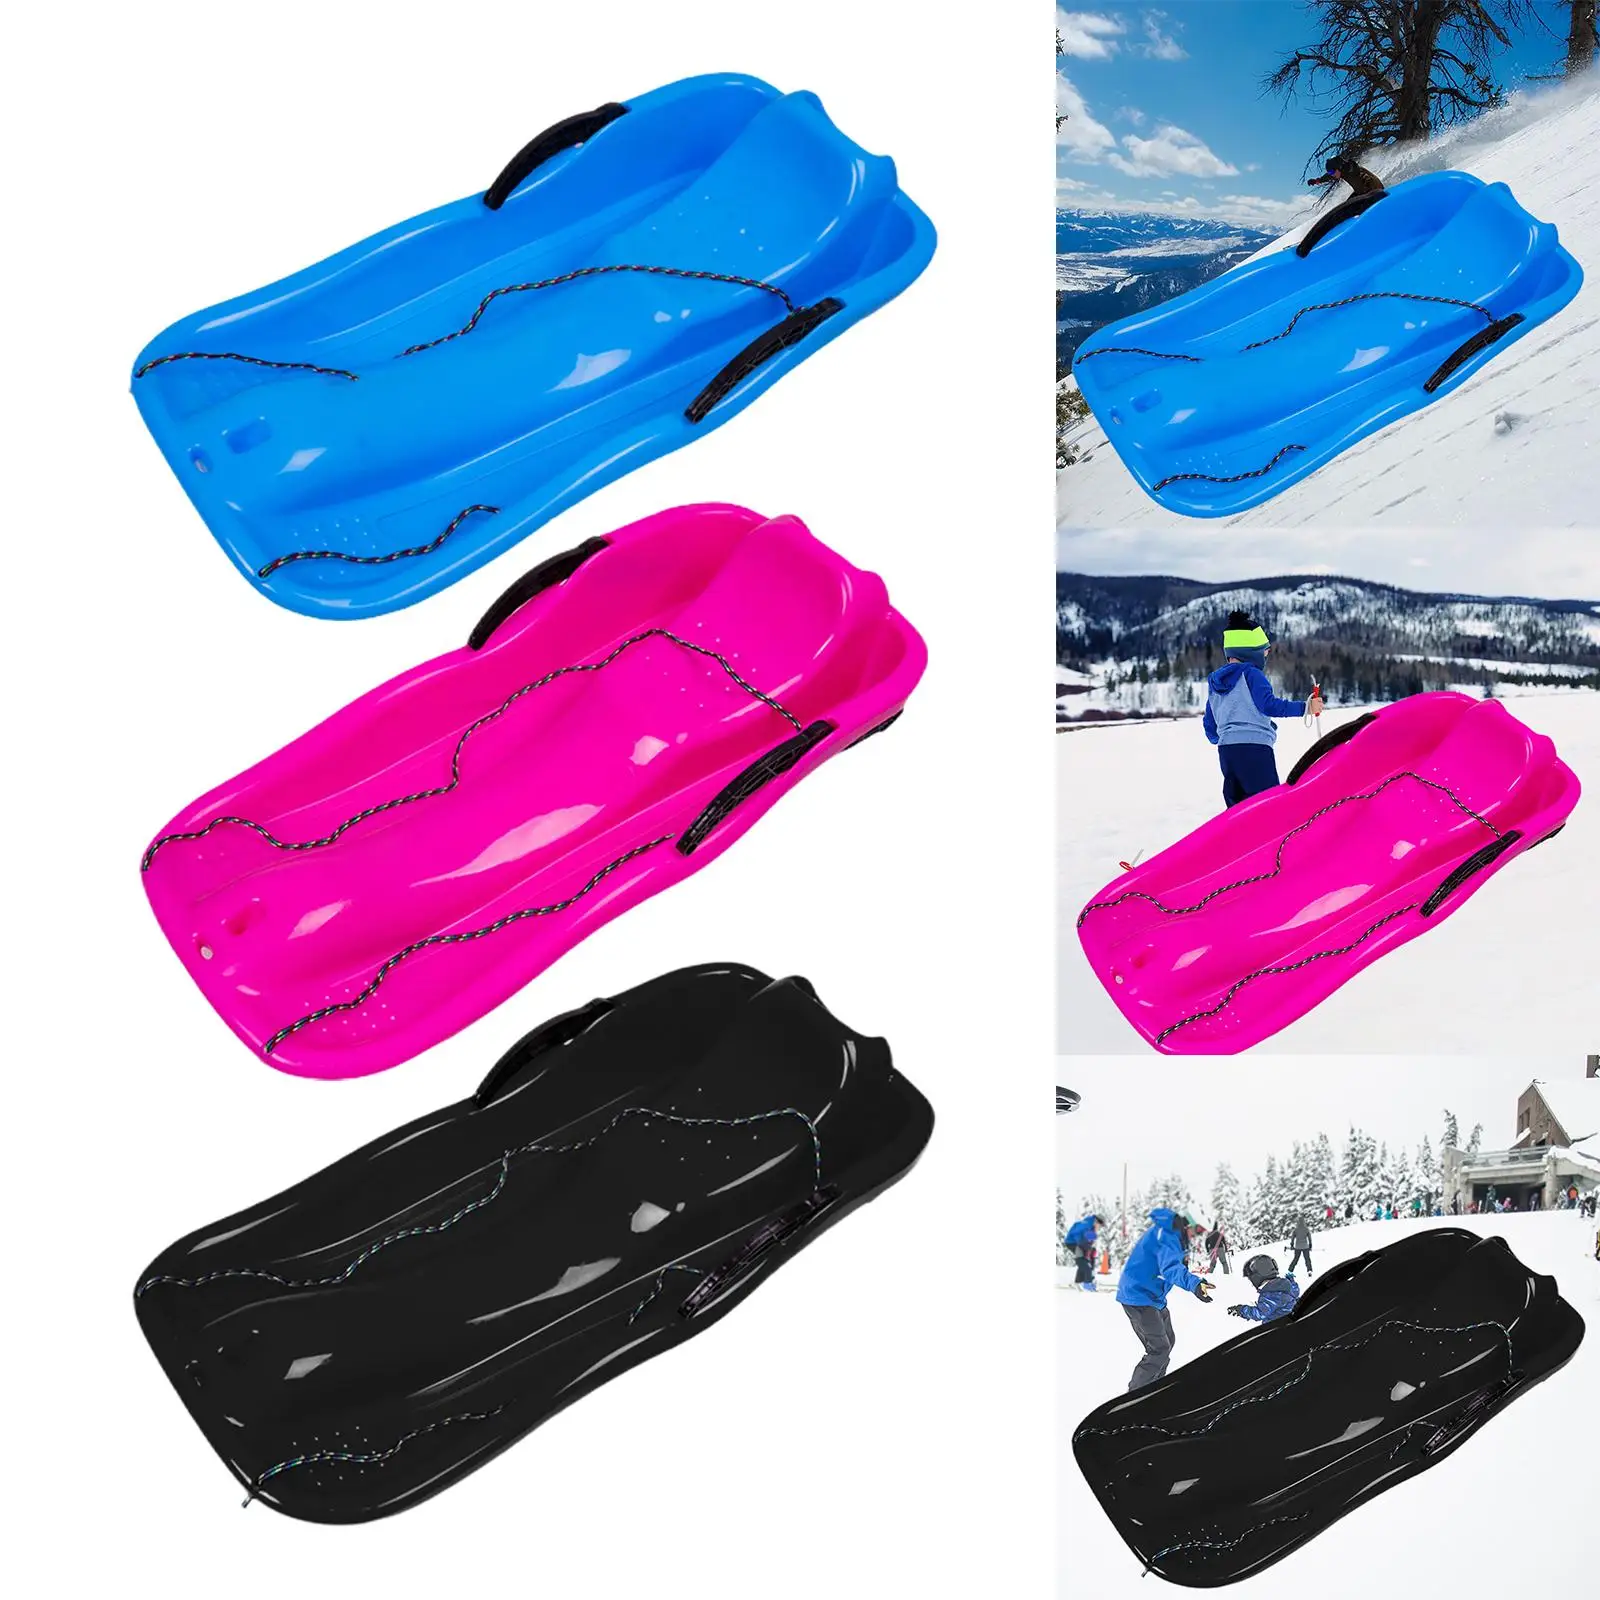 Winter Snow Sled Sledding Double Human Sled Non-Slip Foot Pedal Ski Board Toy